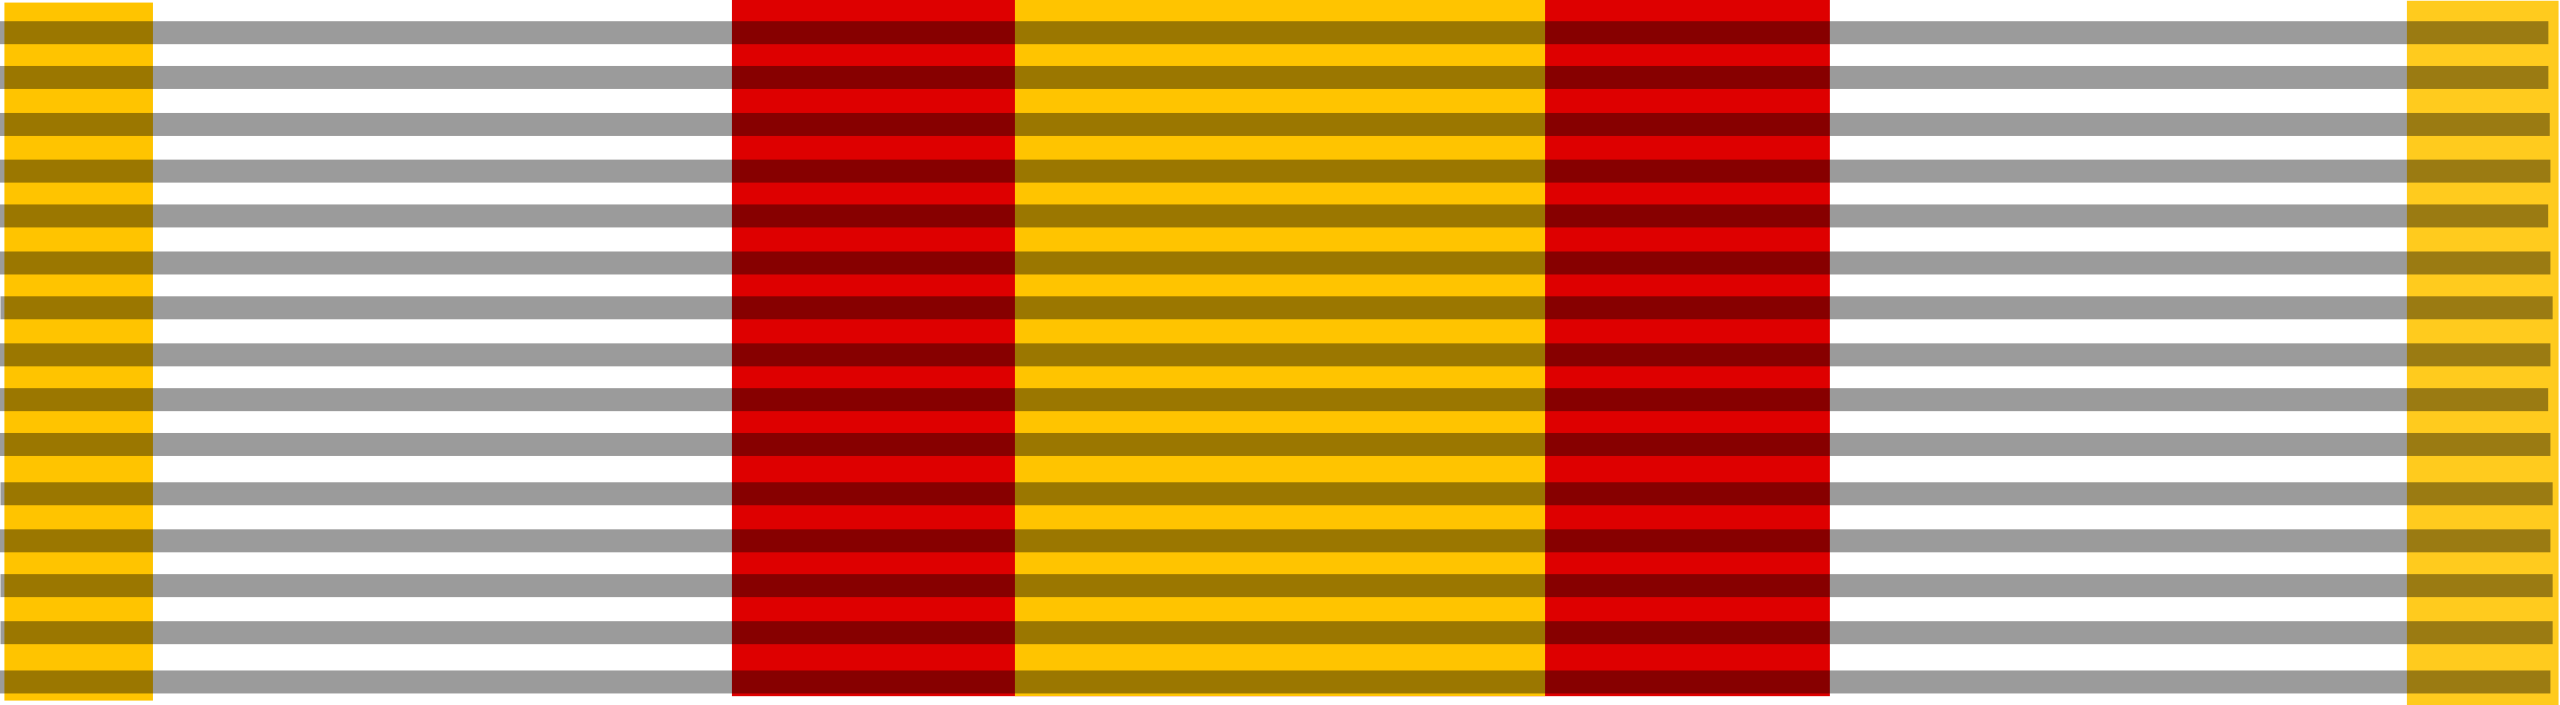 Pasador con 3 medallas Militares